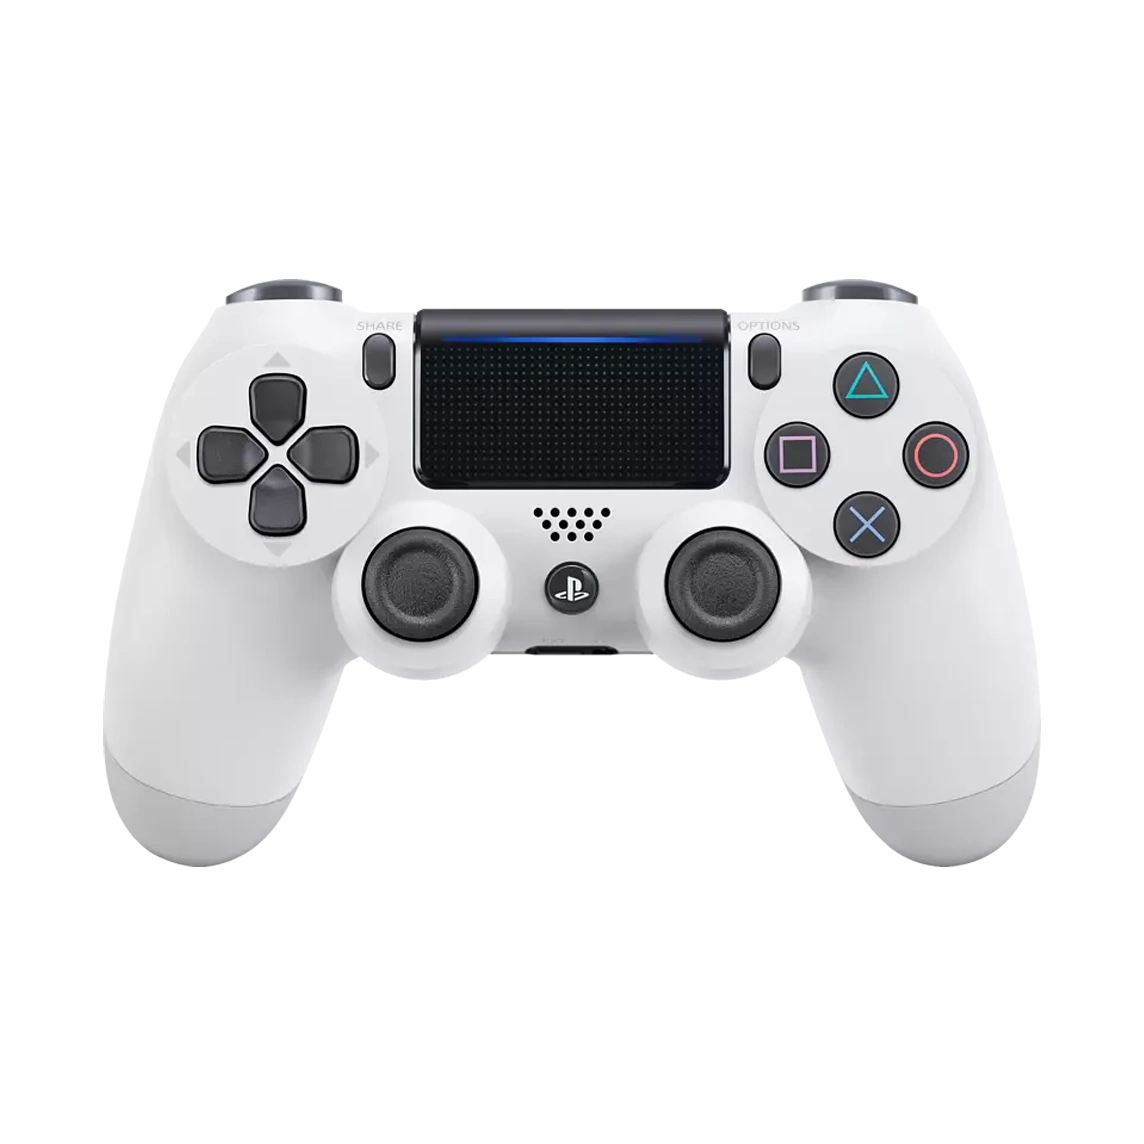 Sony PlayStation 4 DualShock Wireless Controller